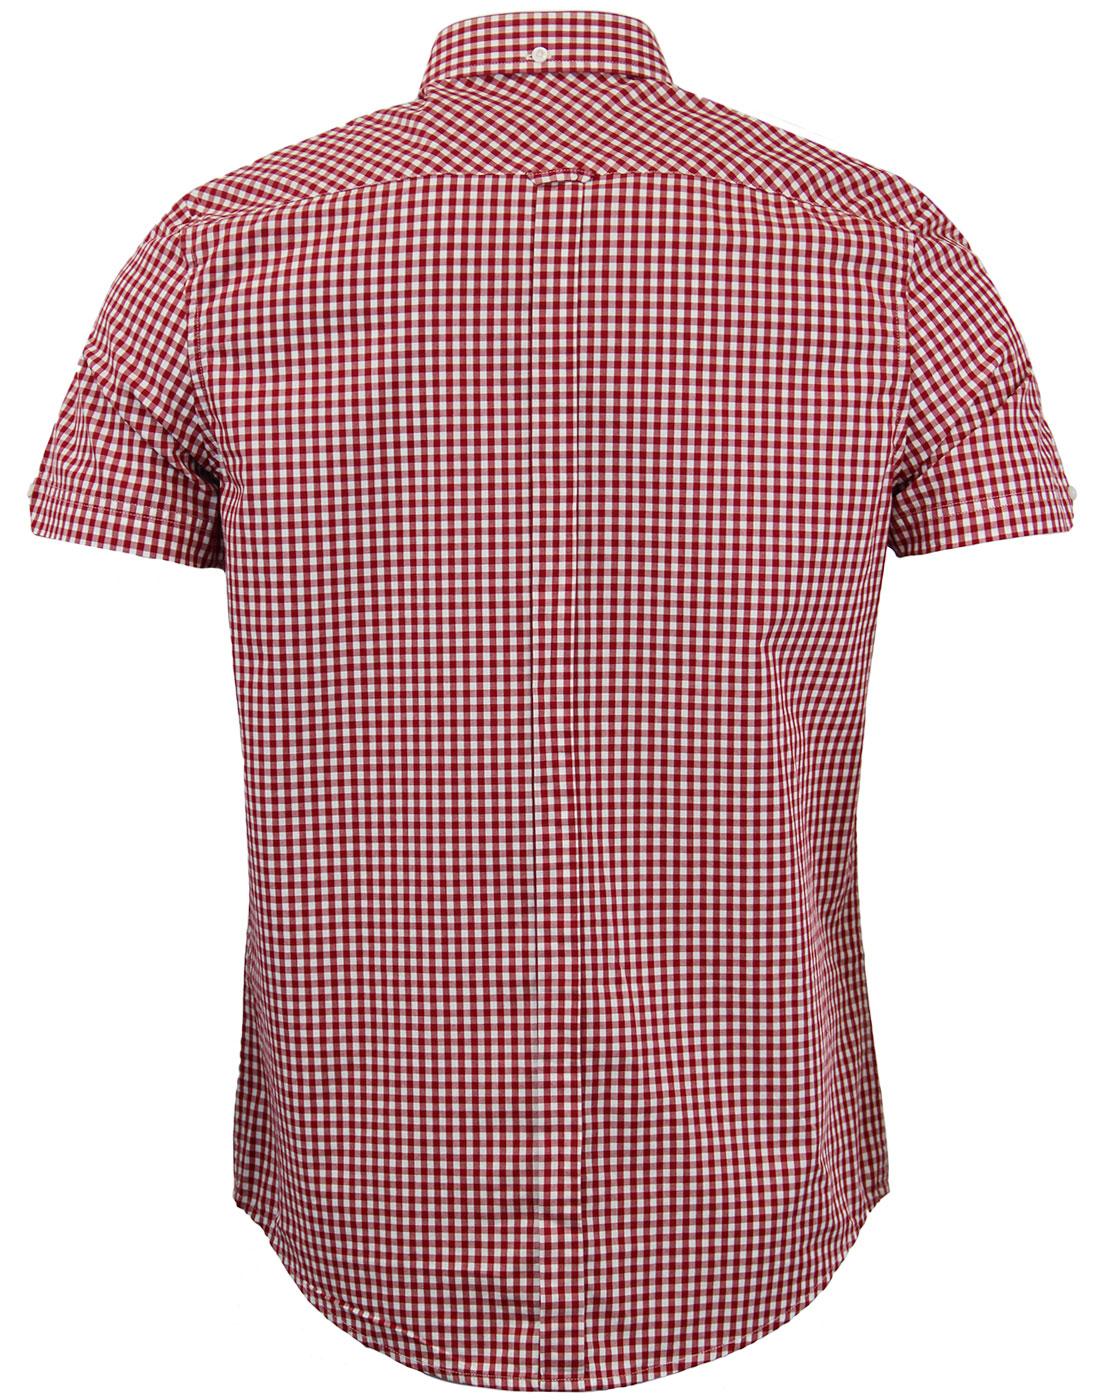 BEN SHERMAN Mens Retro Mod Short Sleeve Gingham Shirt in Red